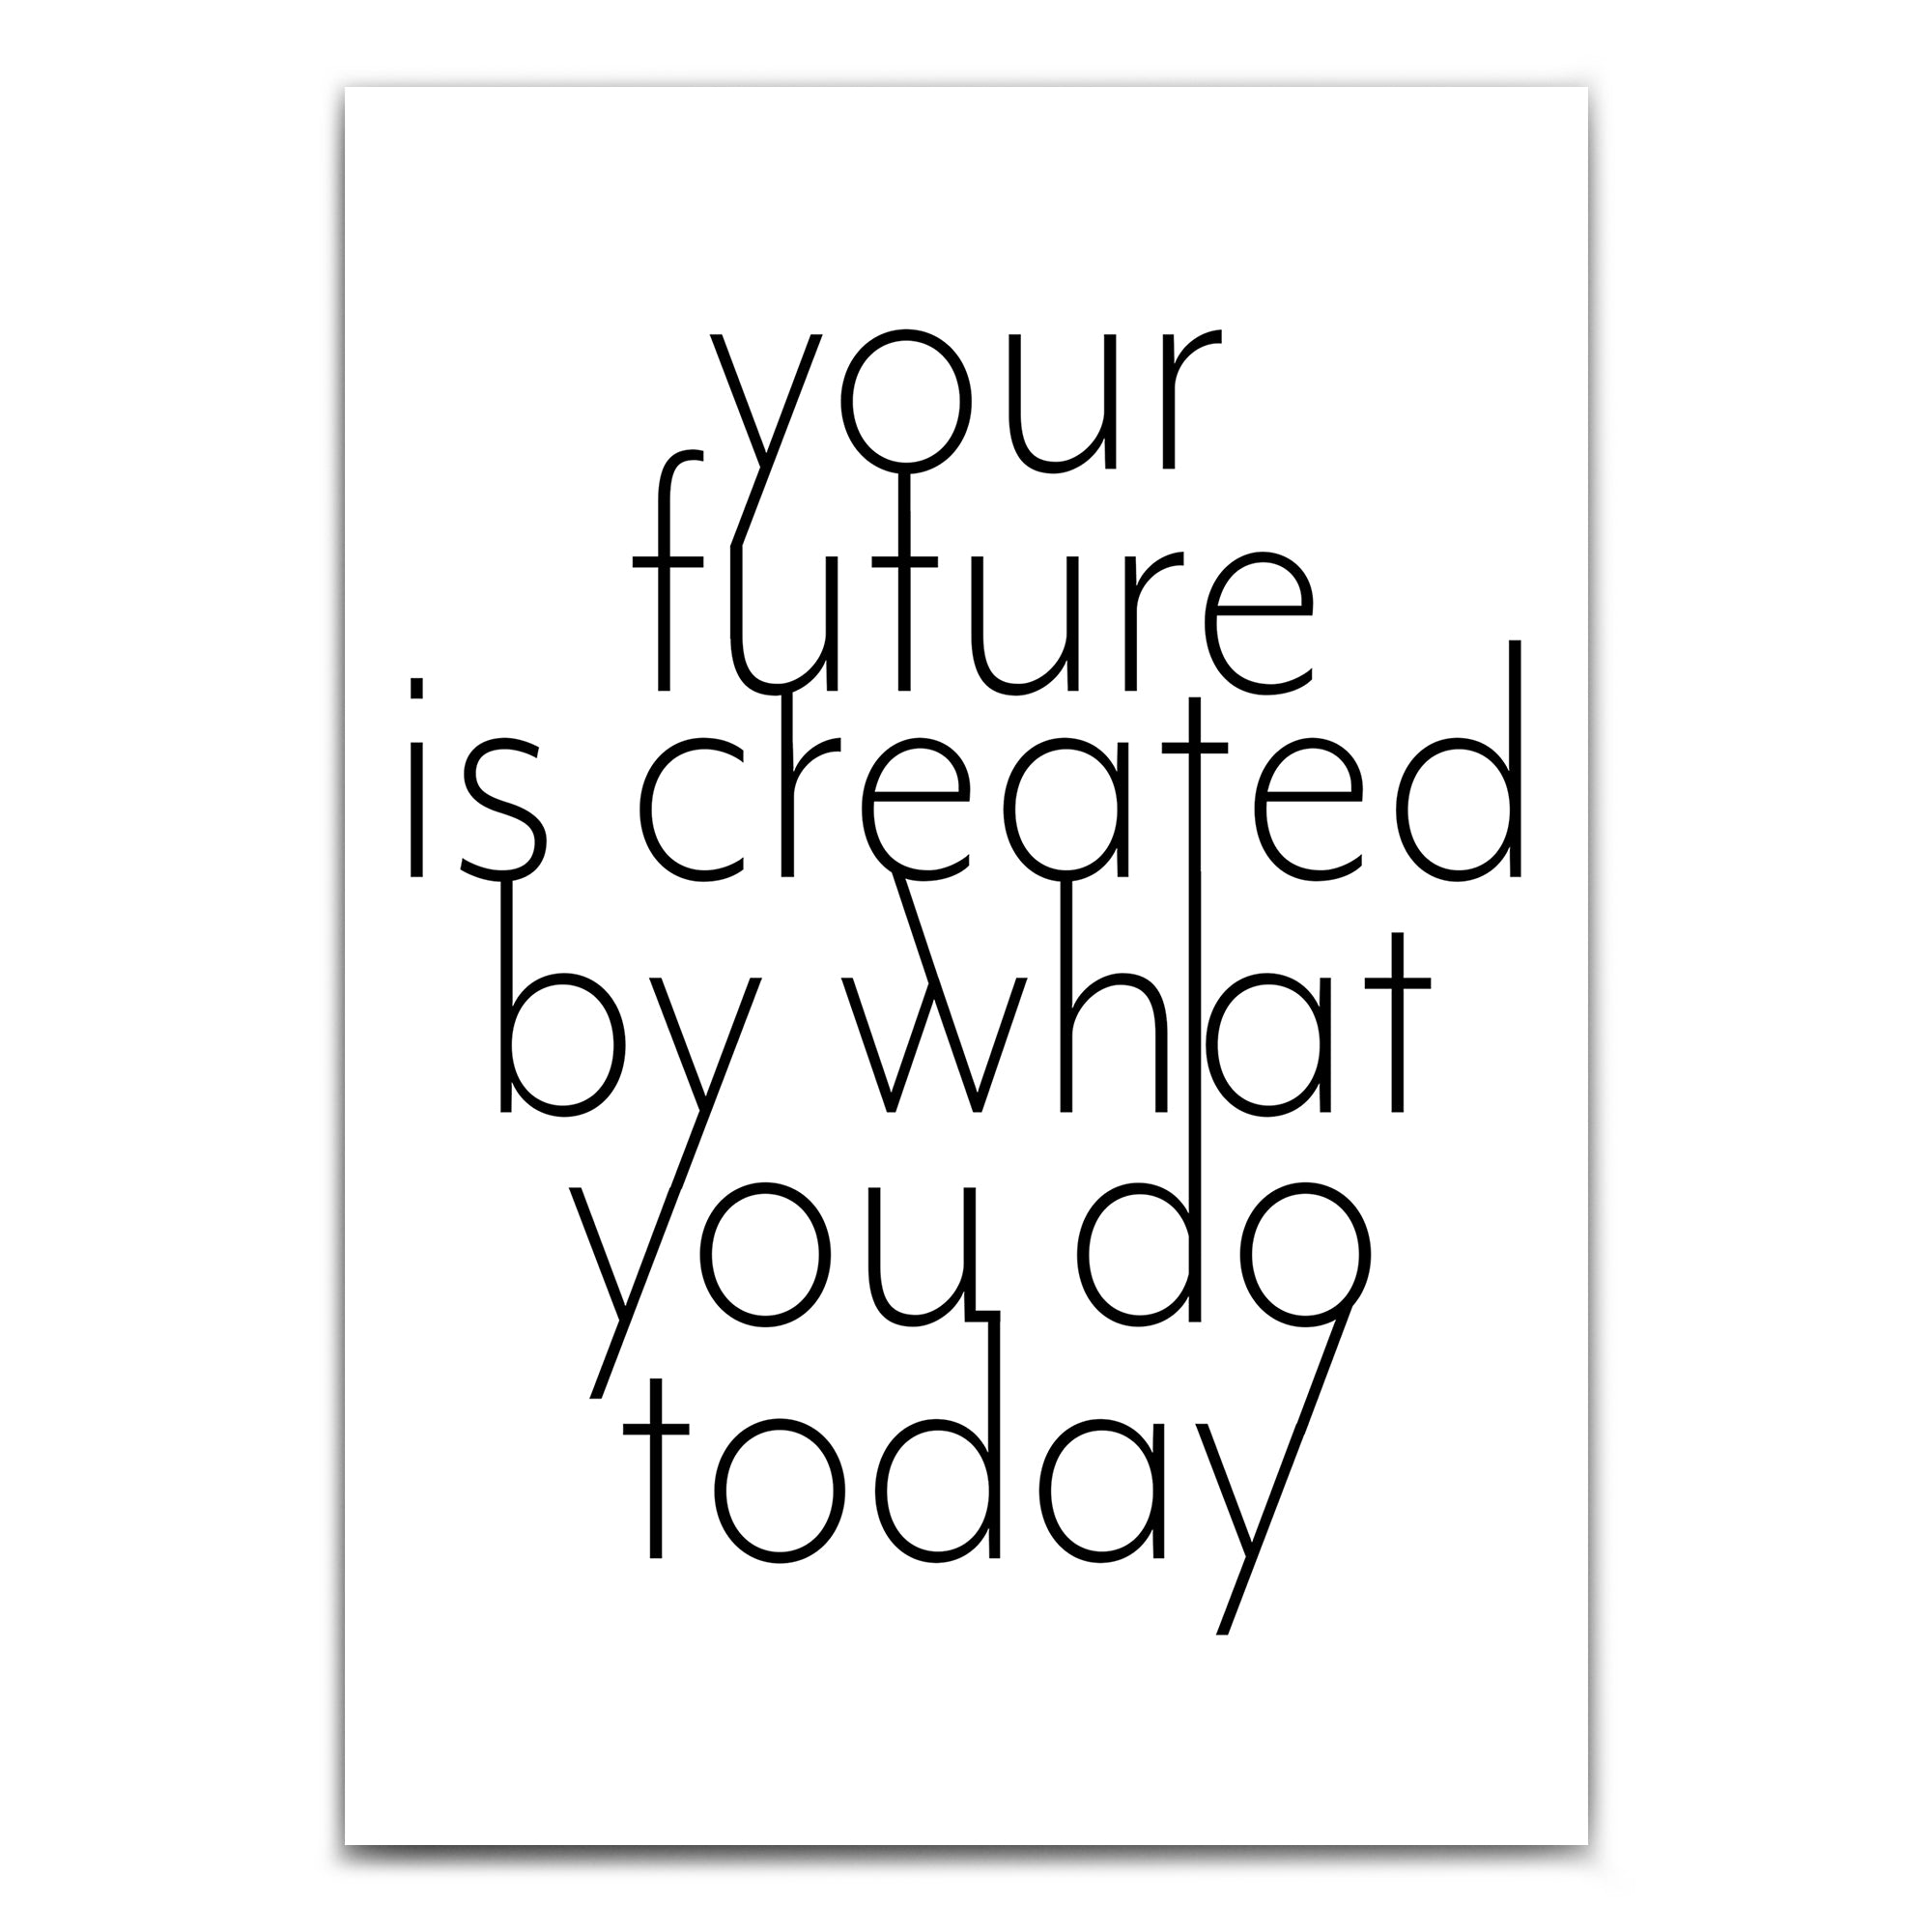 create your future